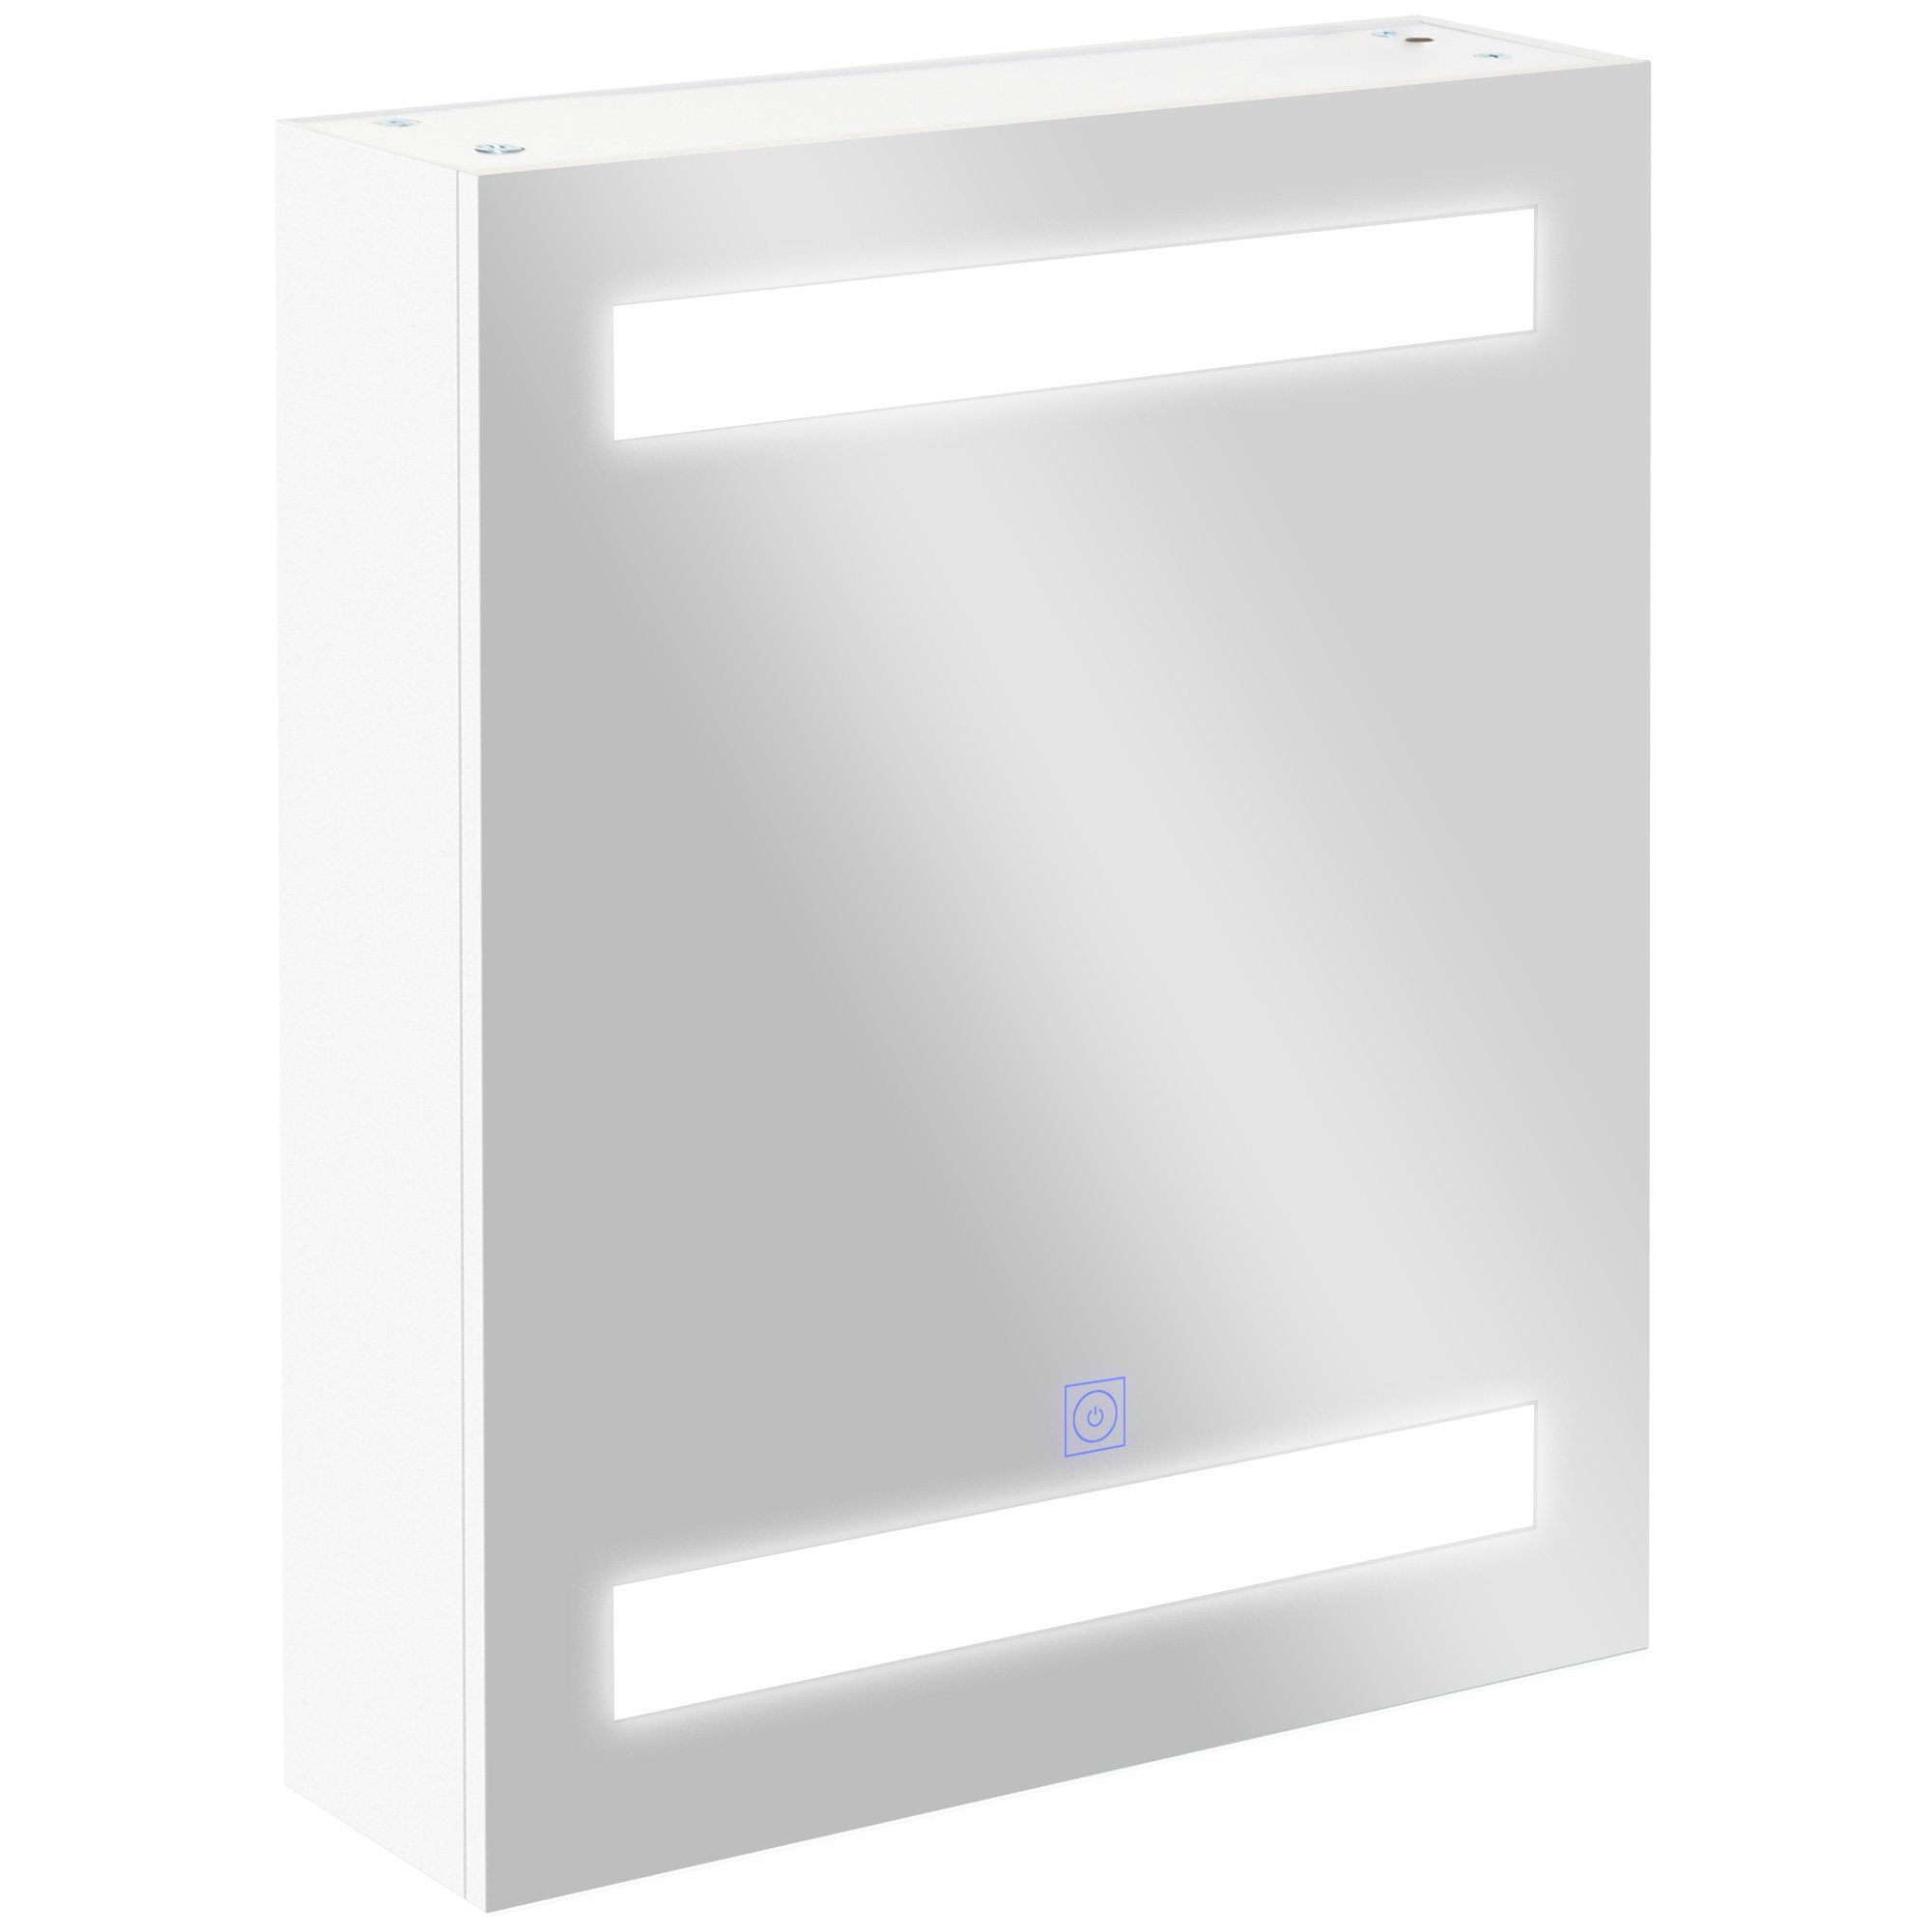 HOMCOM Spiegelschrank LED (Set, LED-Spiegel-Schrank) Badspiegel Lichtspiegel Badschrank Badezimmerspiegel Wand 15W